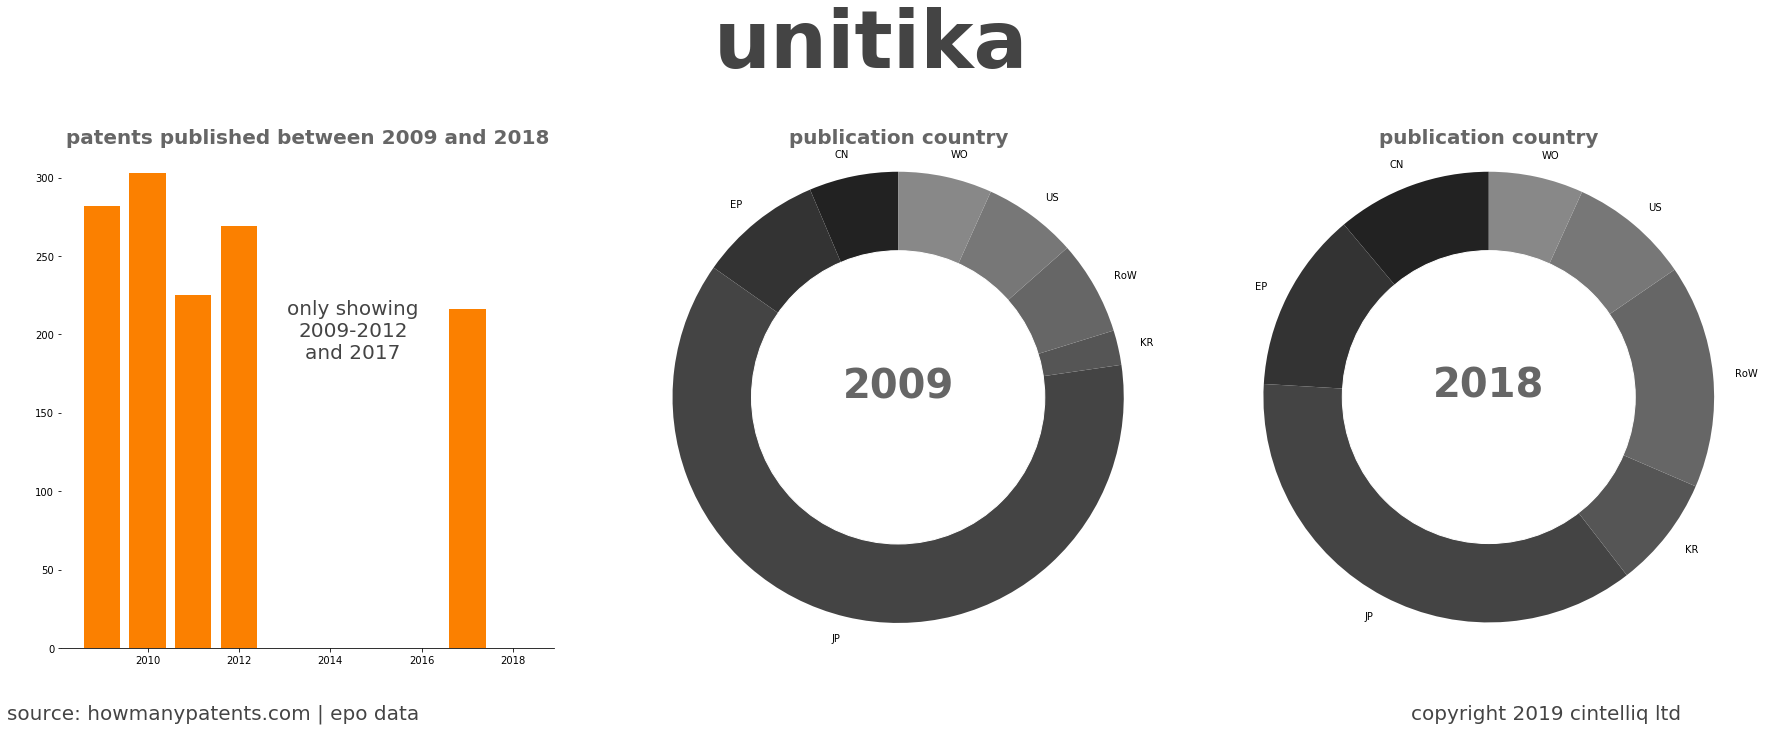 summary of patents for Unitika